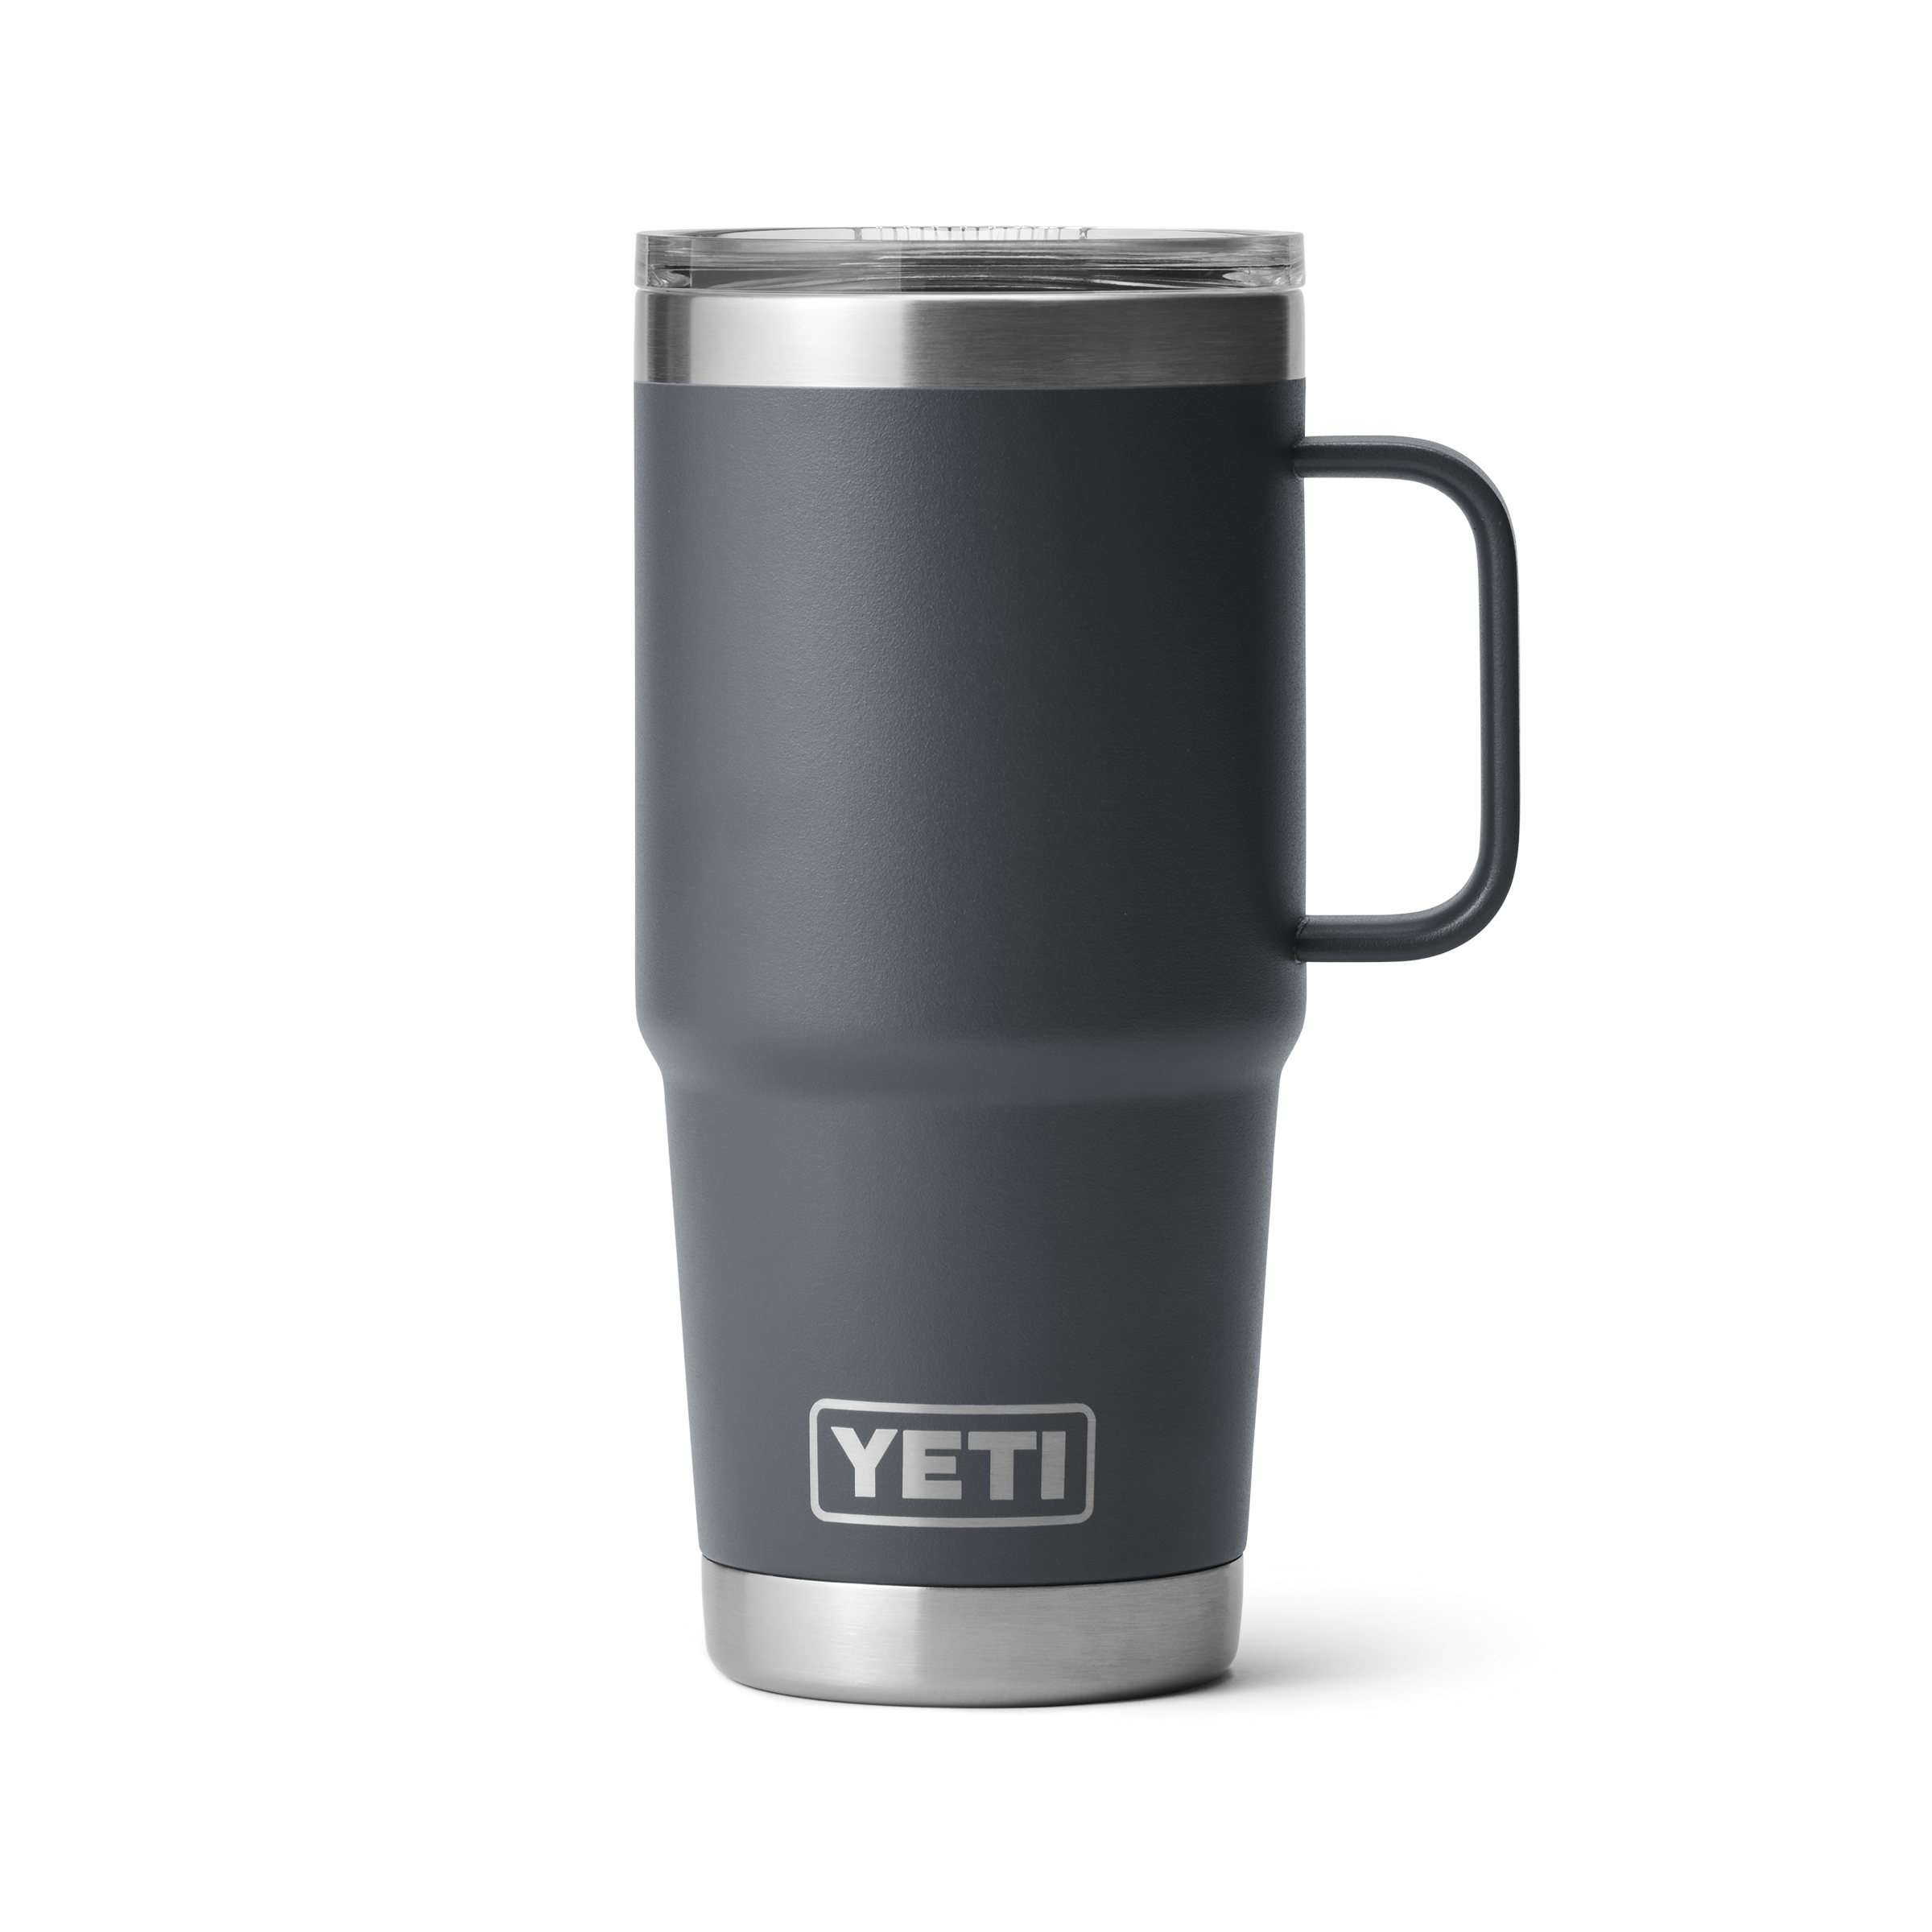 YETI Charcoal coffee mug